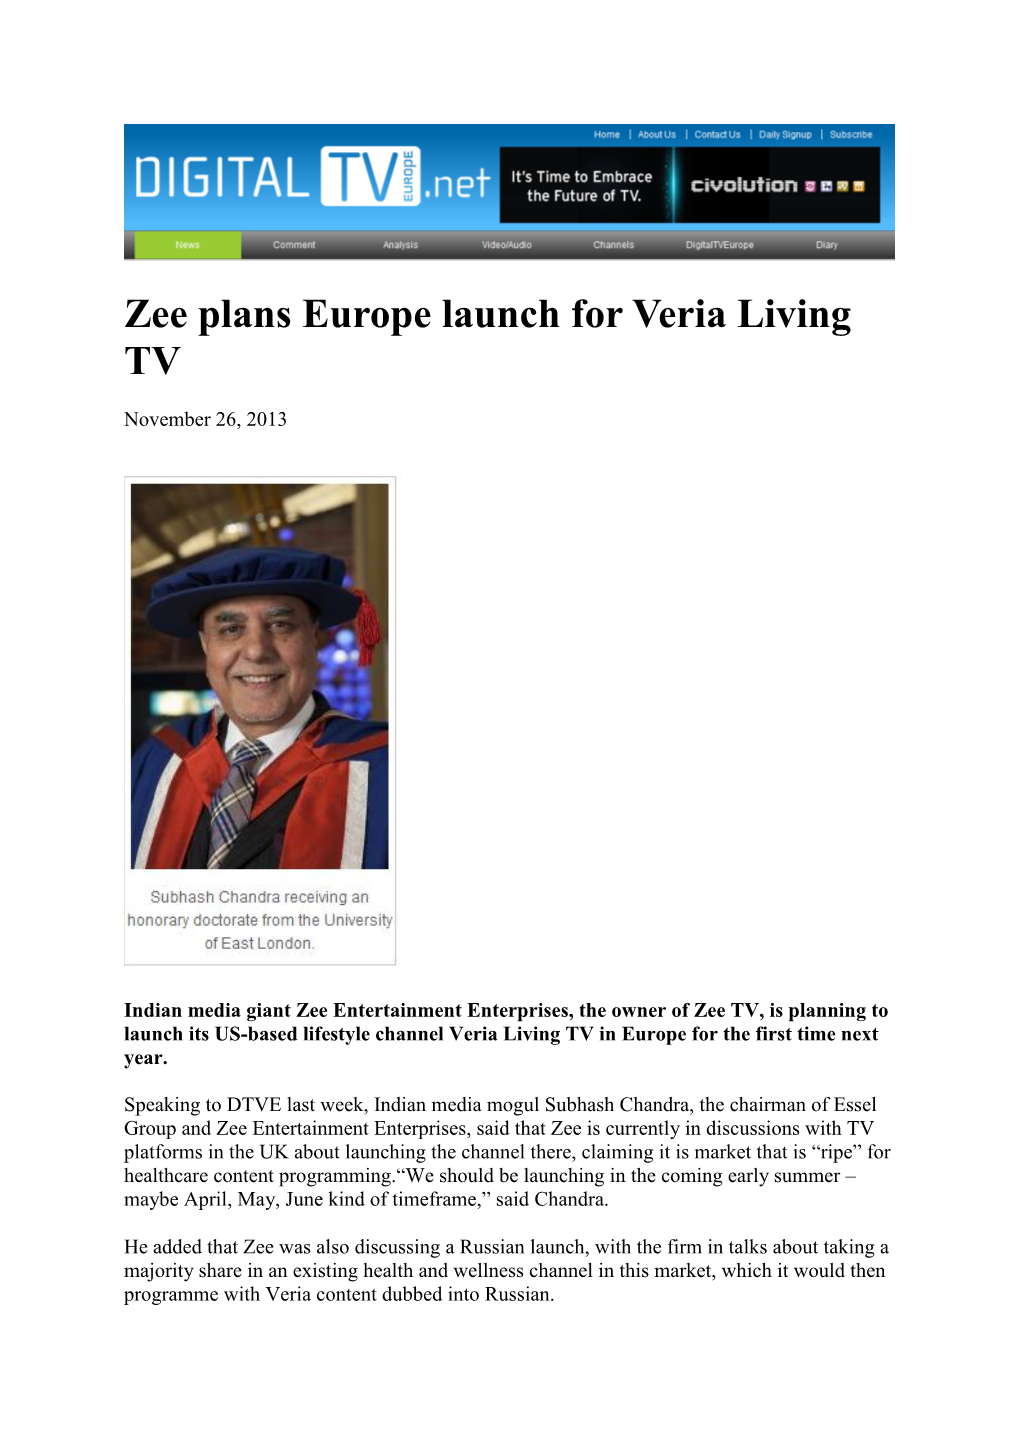 Zee Plans Europe Launch for Veria Living TV